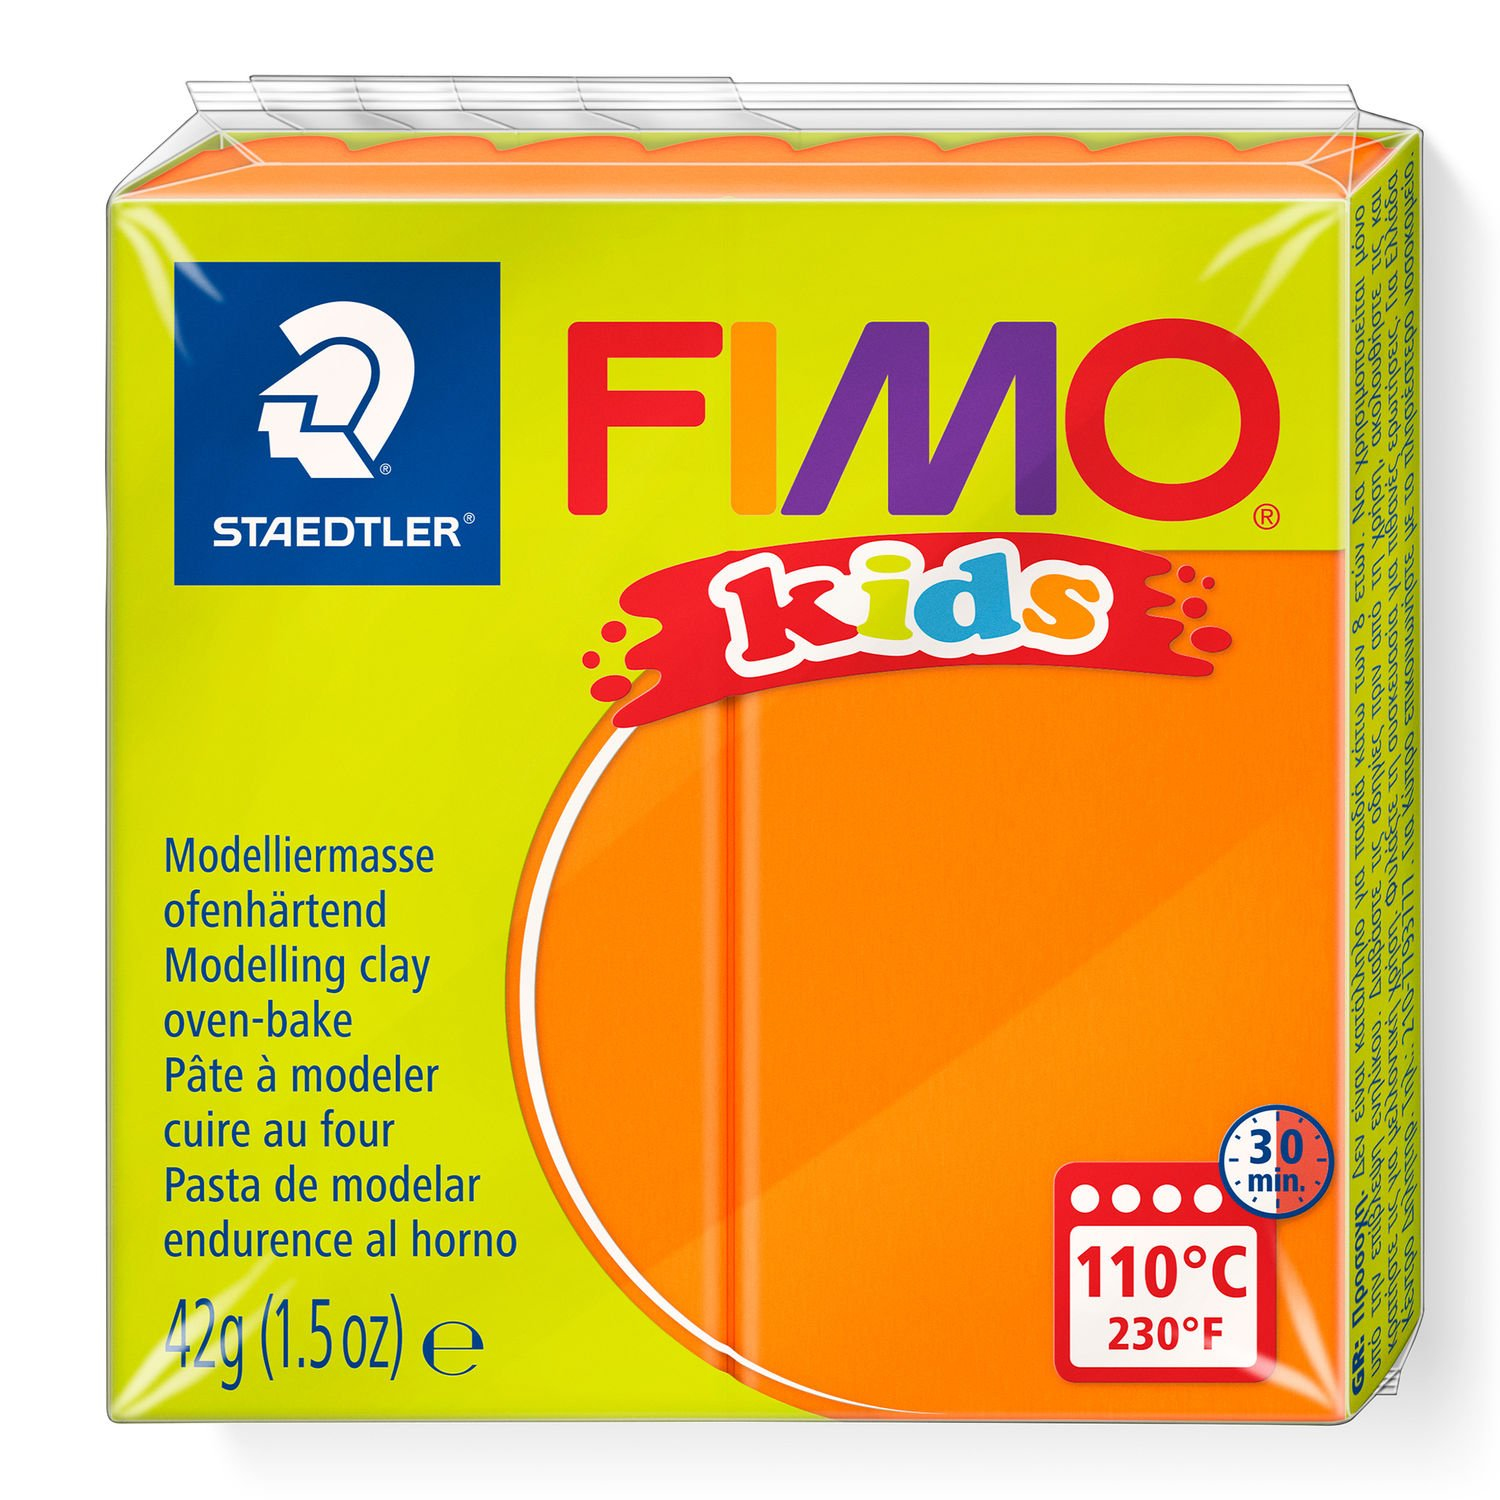 STAEDTLER FIMO 8030 - Modellierton - Orange - Kinder - 1 Stück(e) - 1 Farben - 110 °C